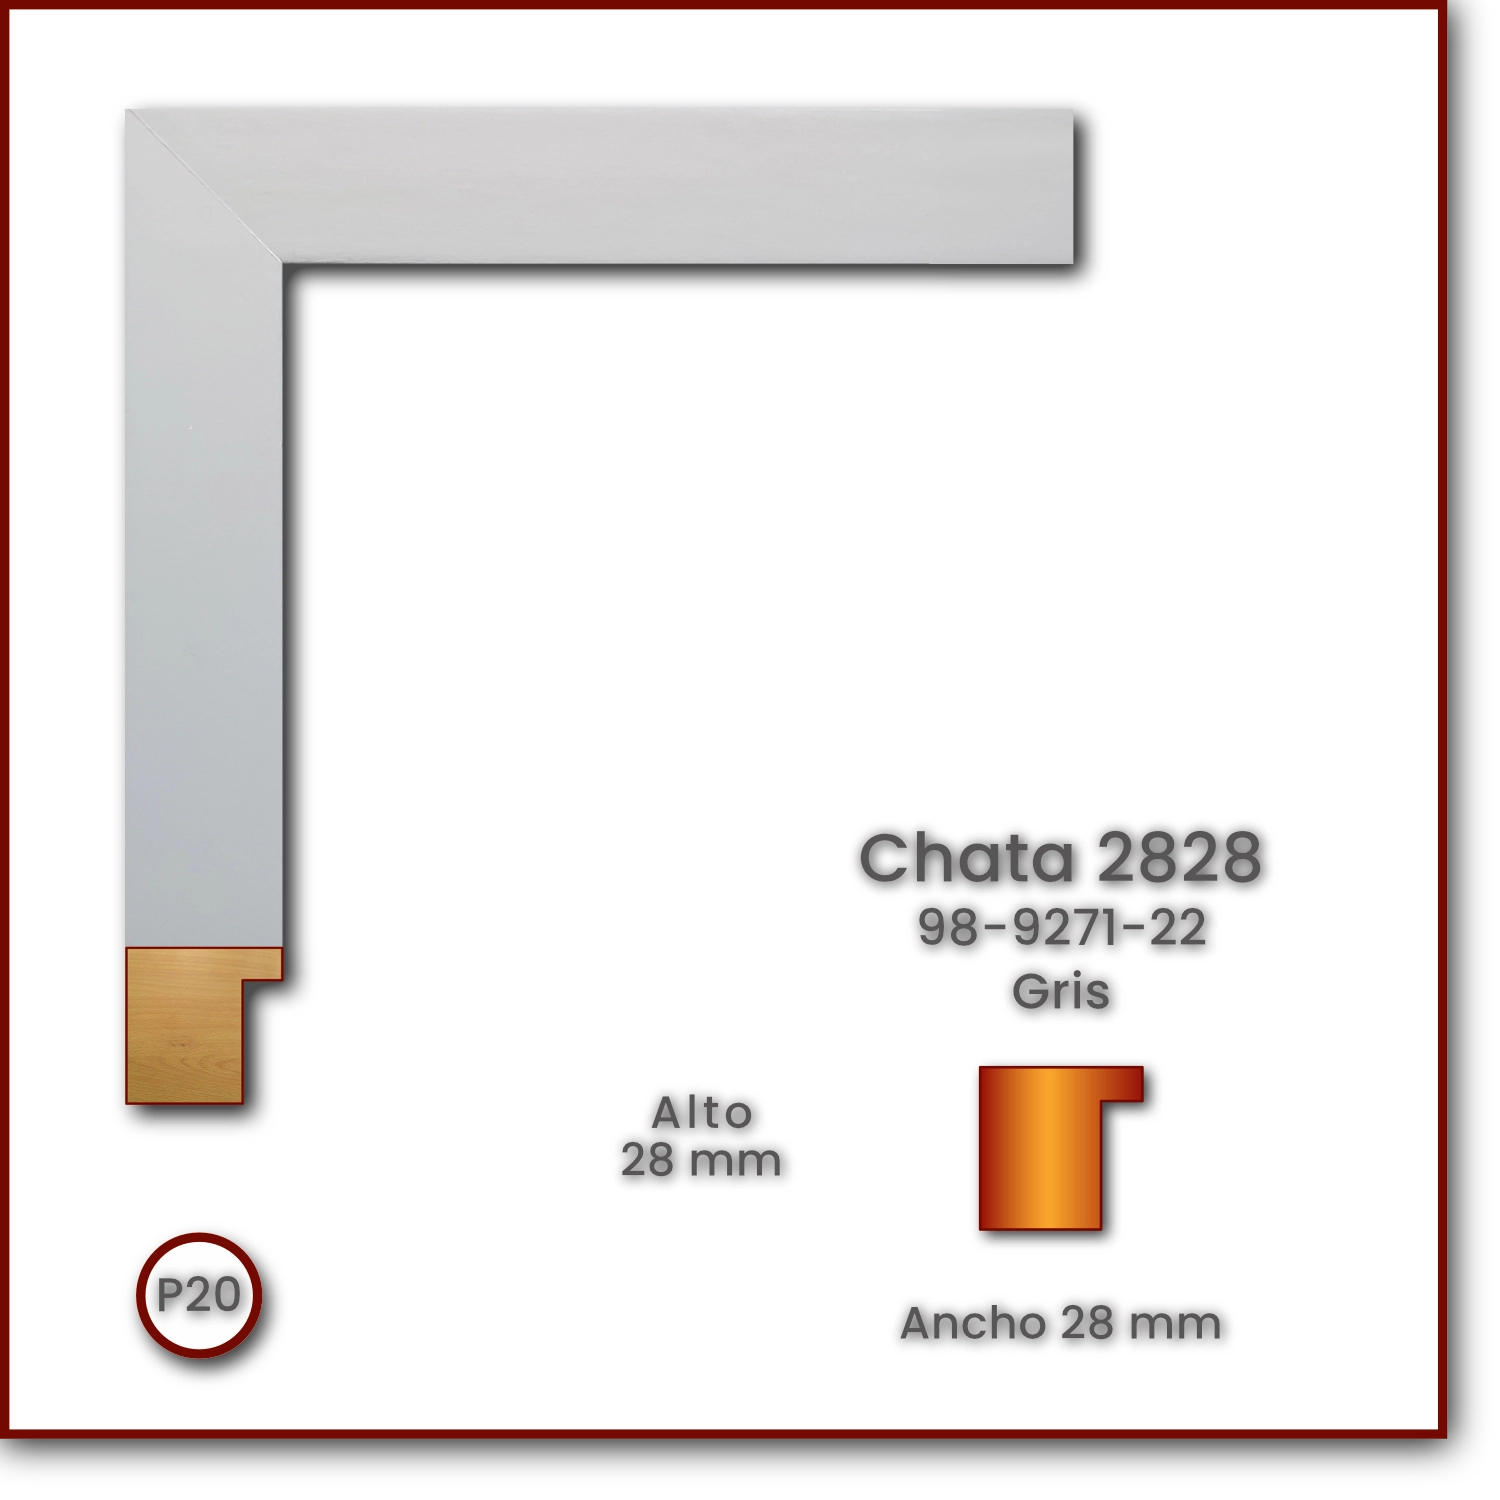 Chata 2828 | Gris | 398-9271-22